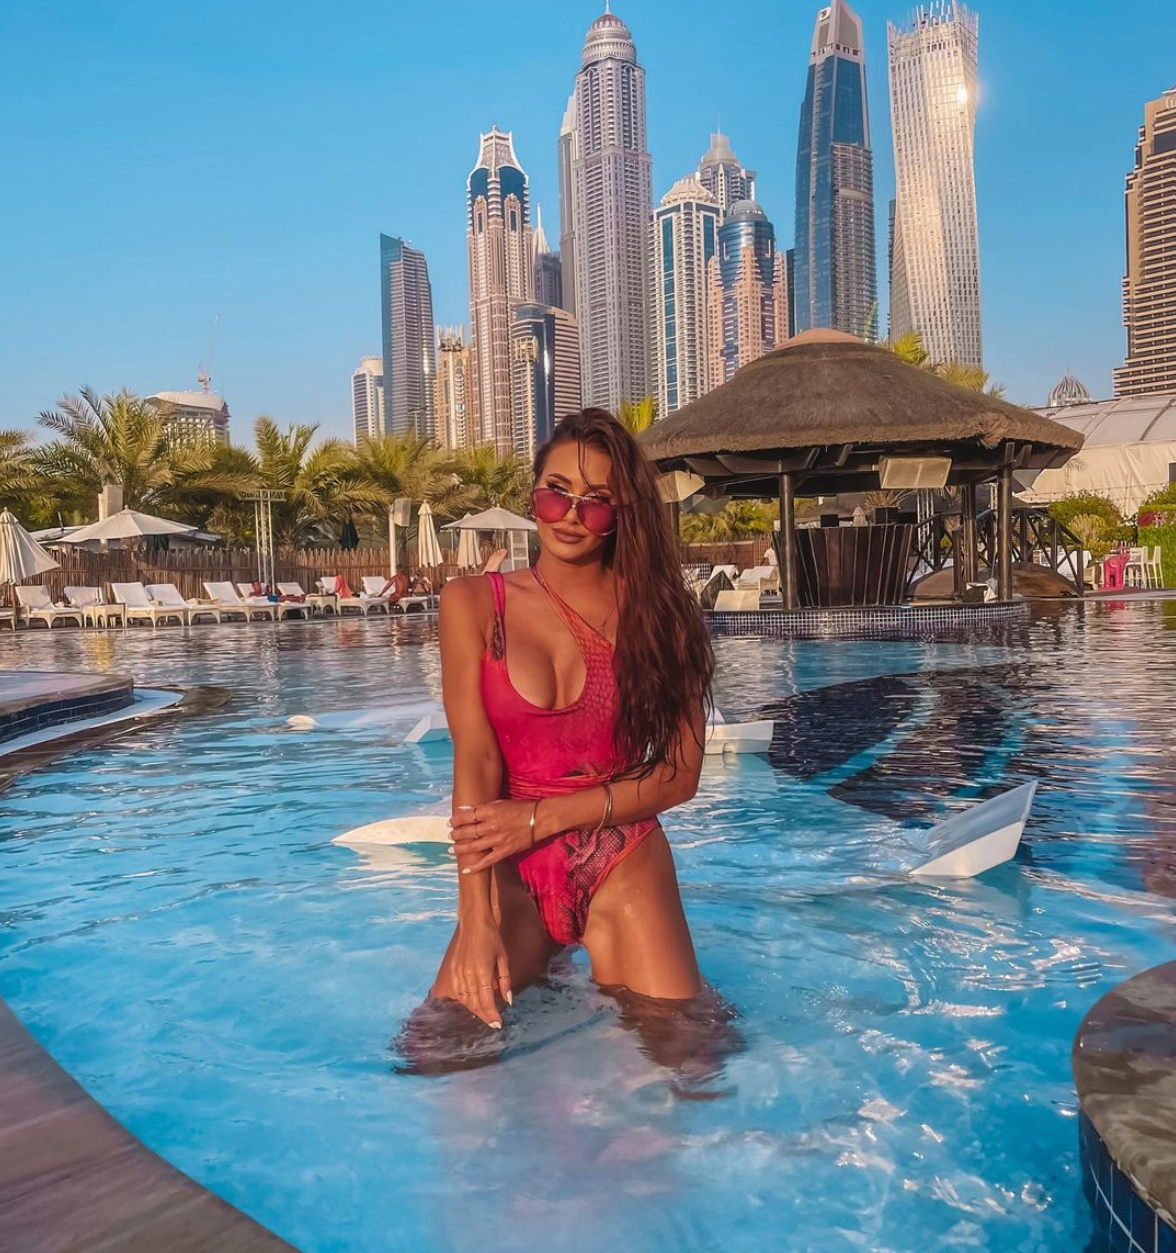 An Instagram influencer posing in Dubai